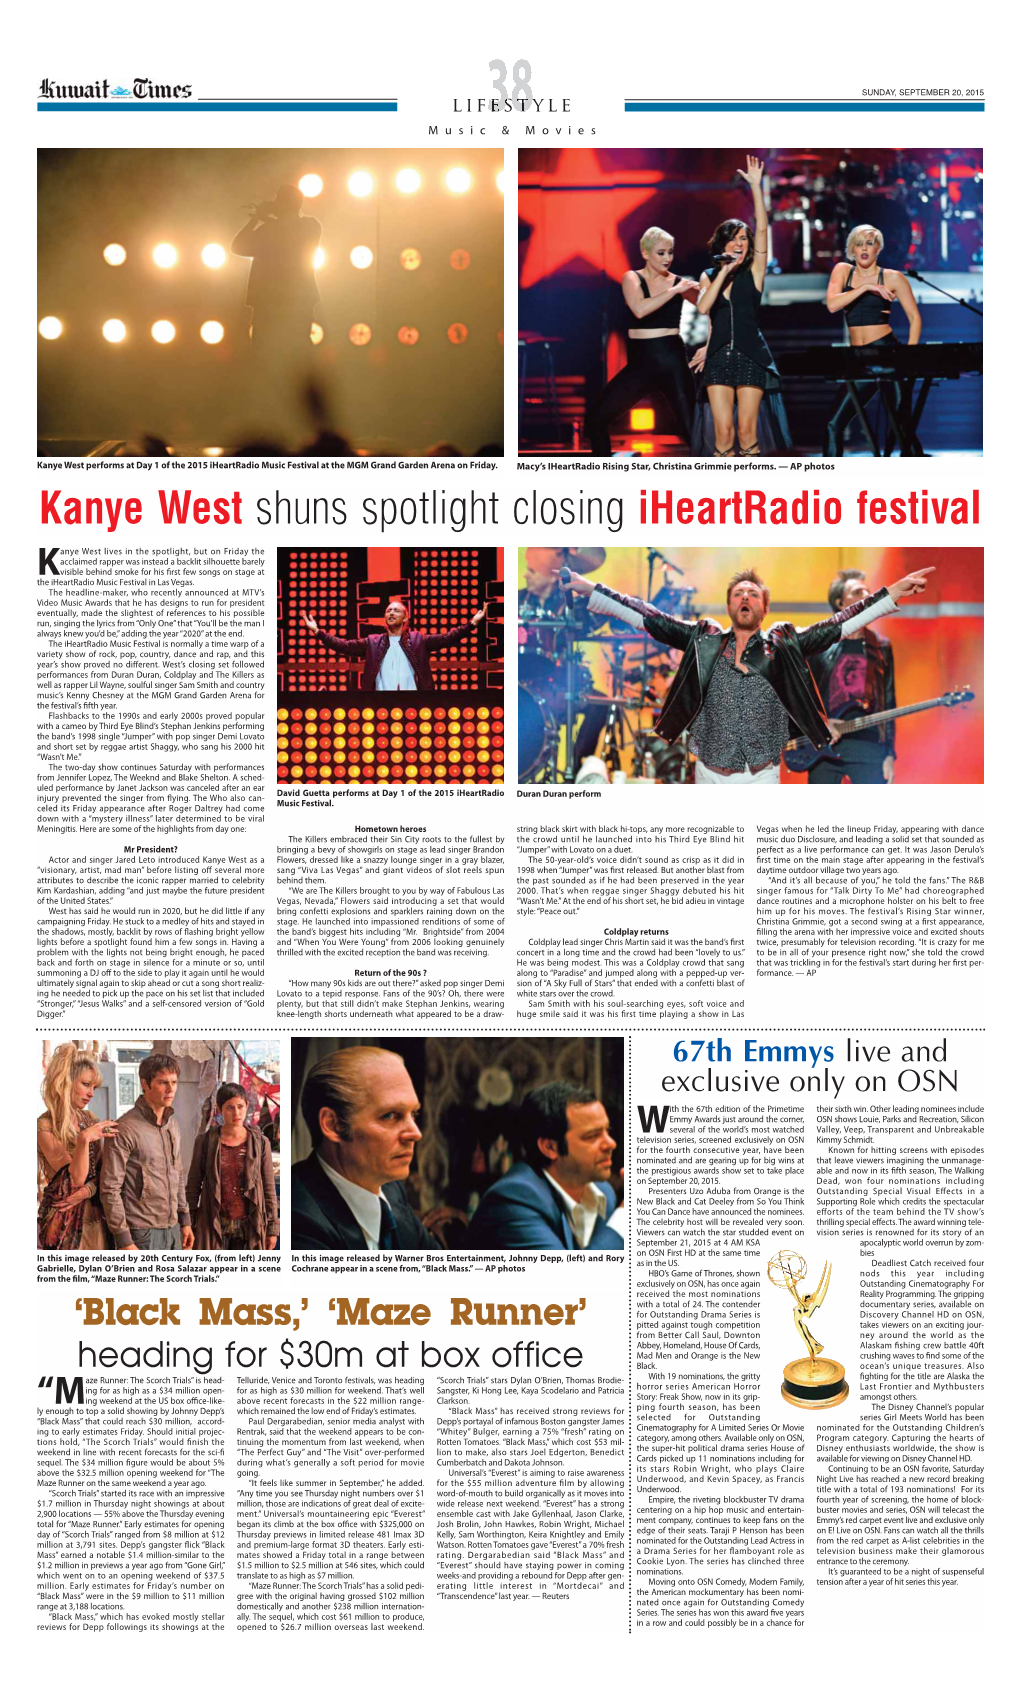 Kanye West Shuns Spotlight Closing Iheartradio Festival